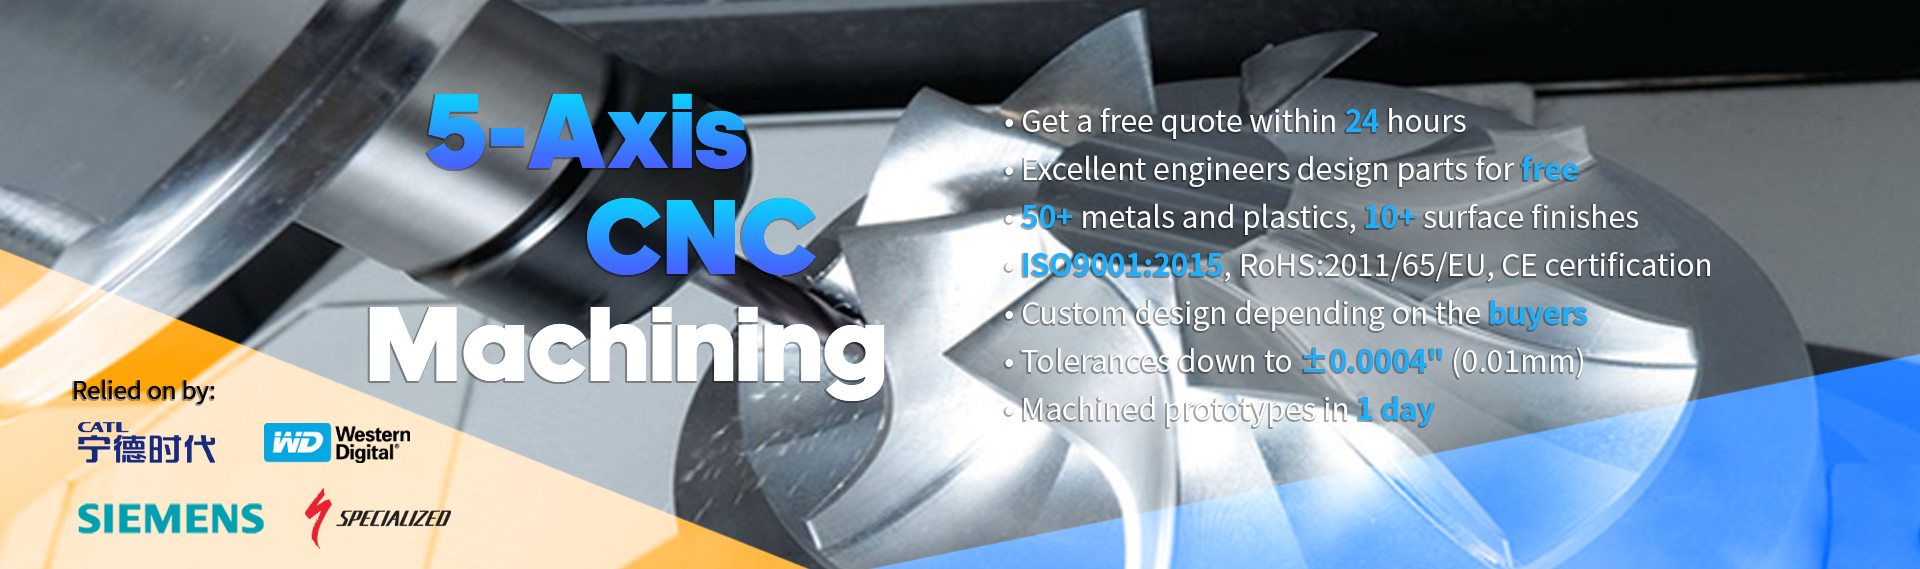 5-axis-cnc-machining-service